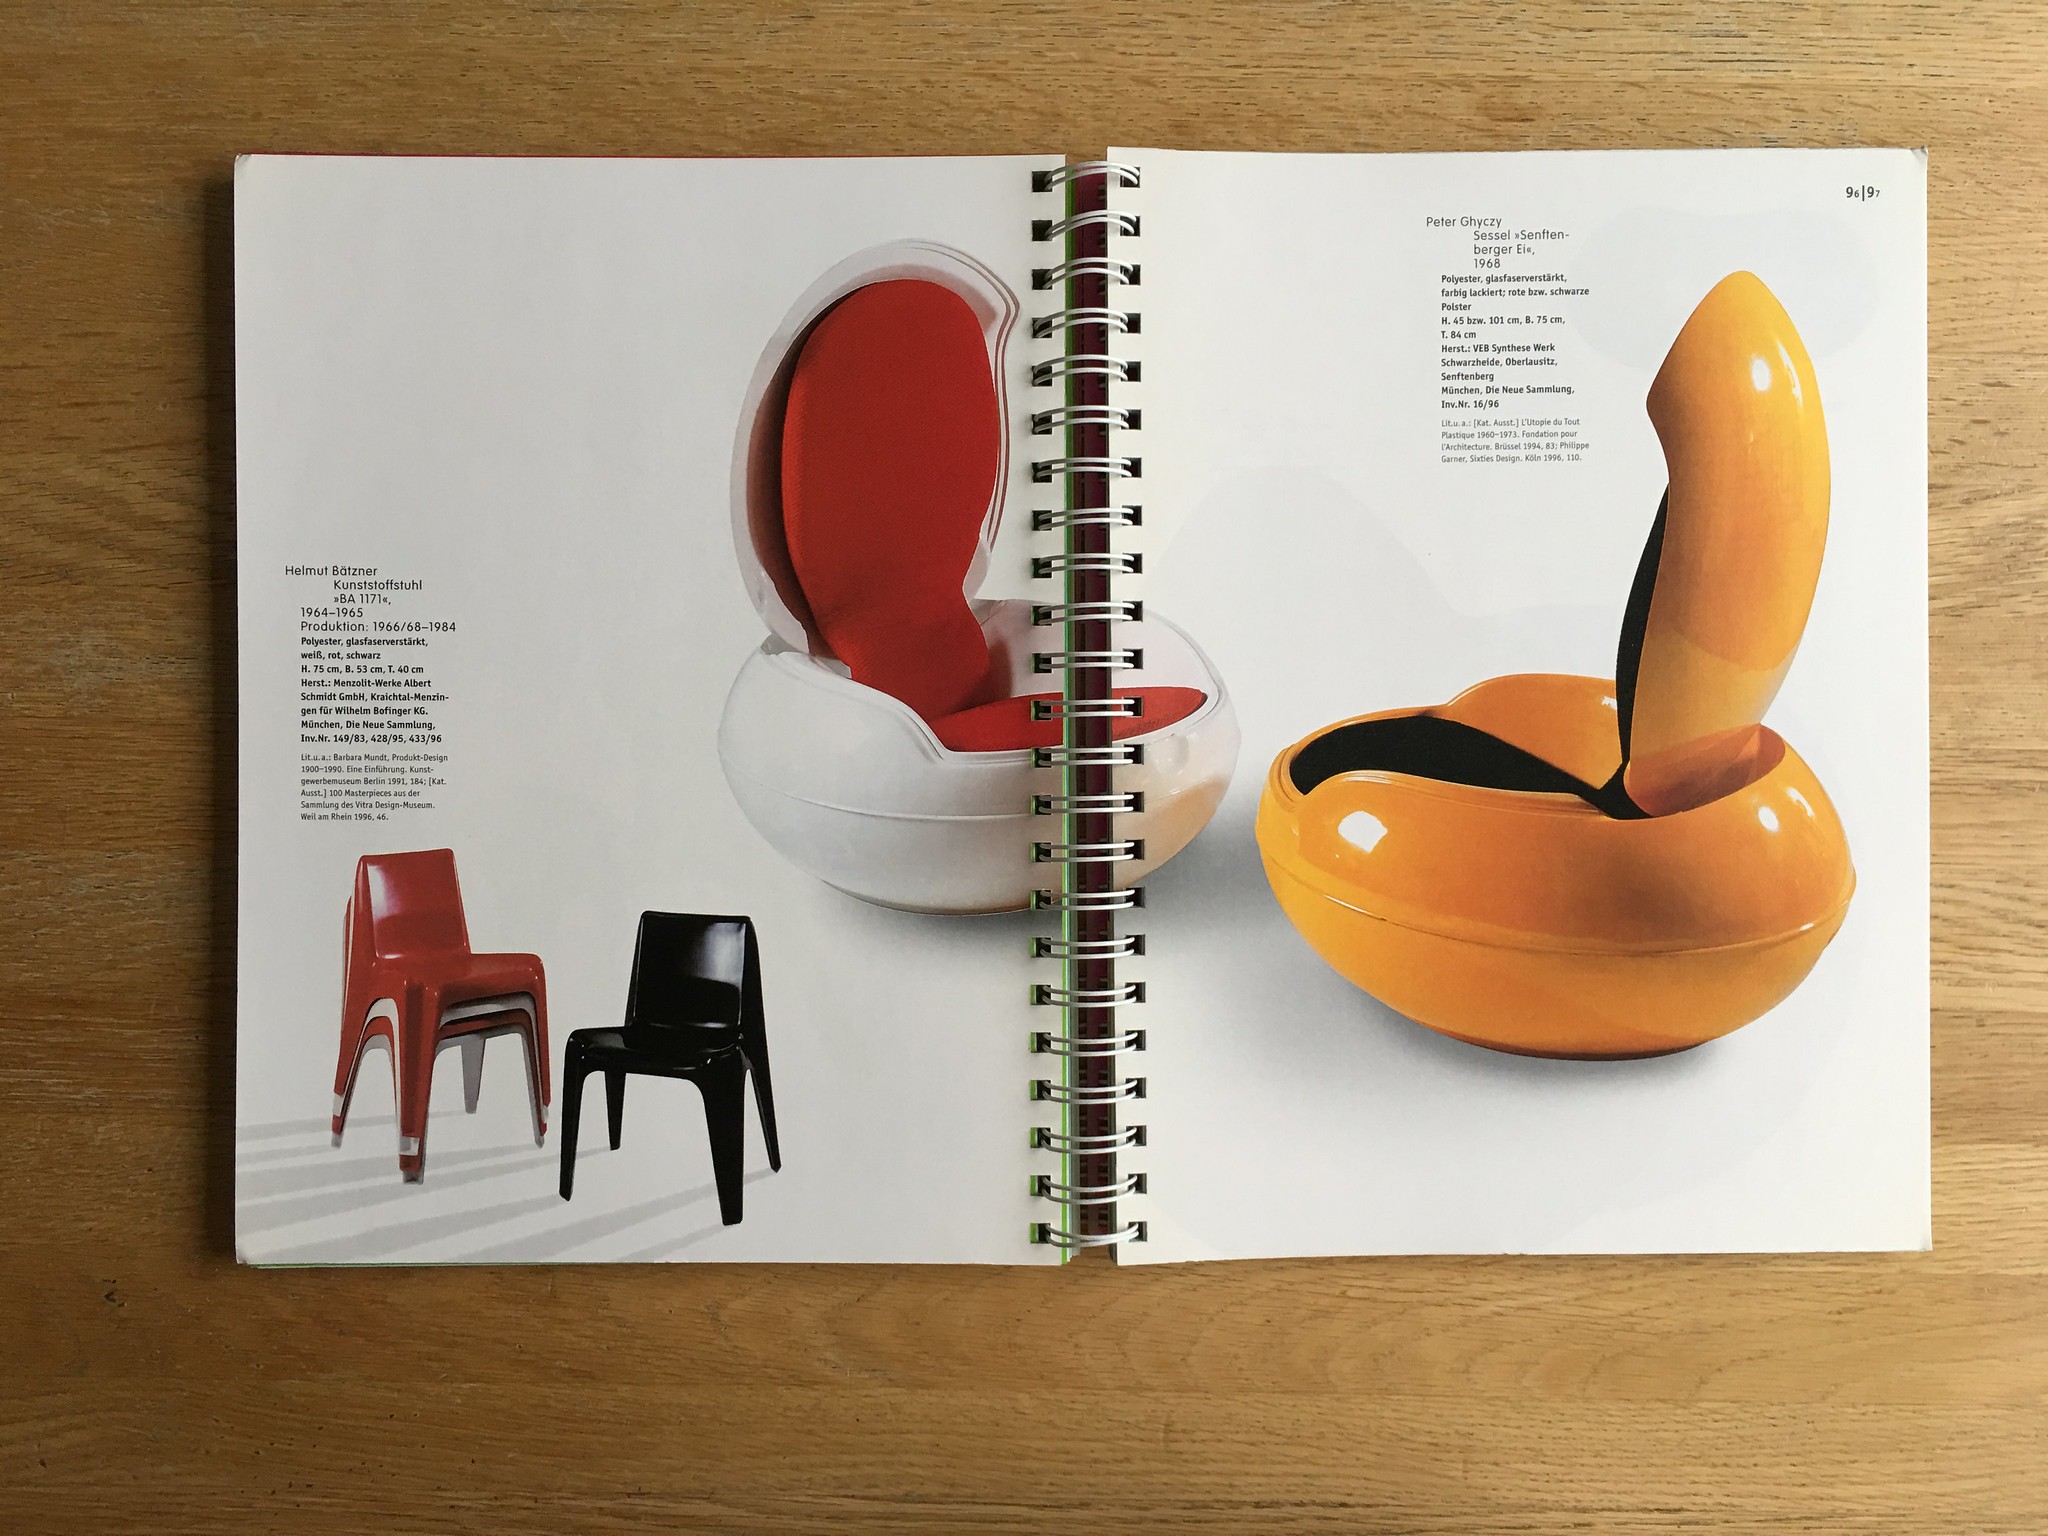 Plastics and design: Hufnagl, Florian